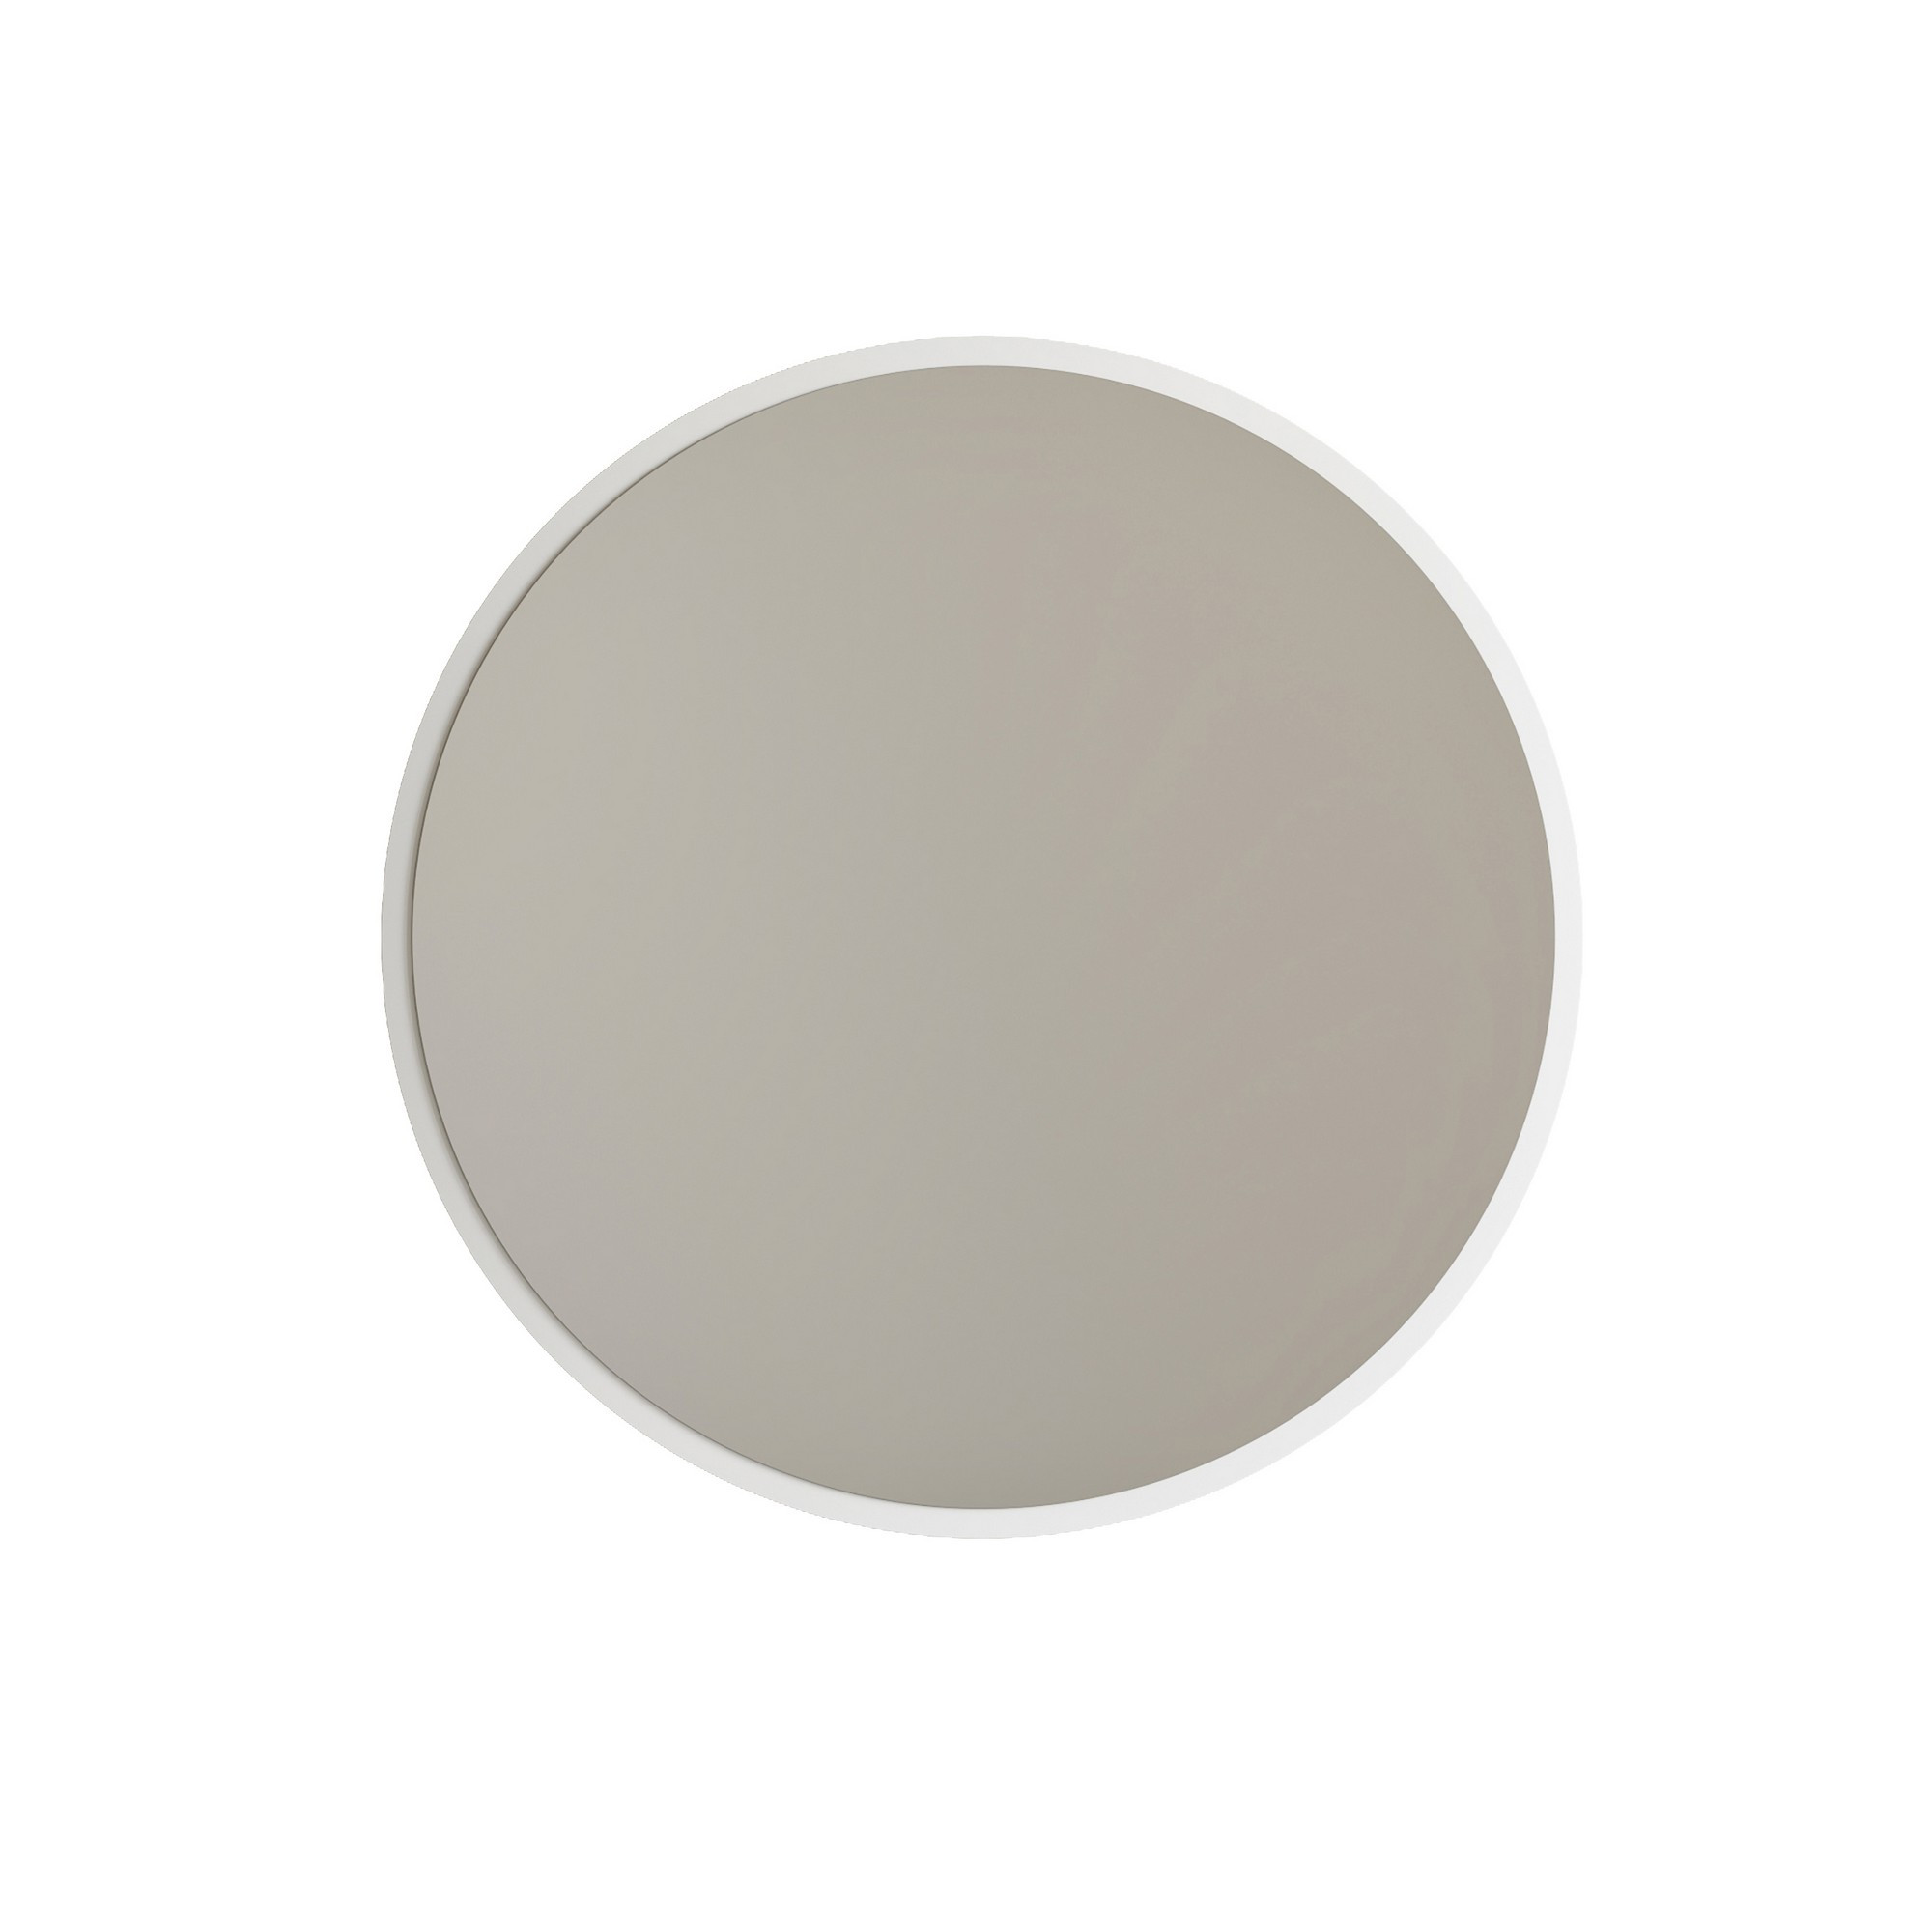 NORDVÄRK Dekoratif vægspejl, rund - spejlglas og hvid MDF (Ø60)